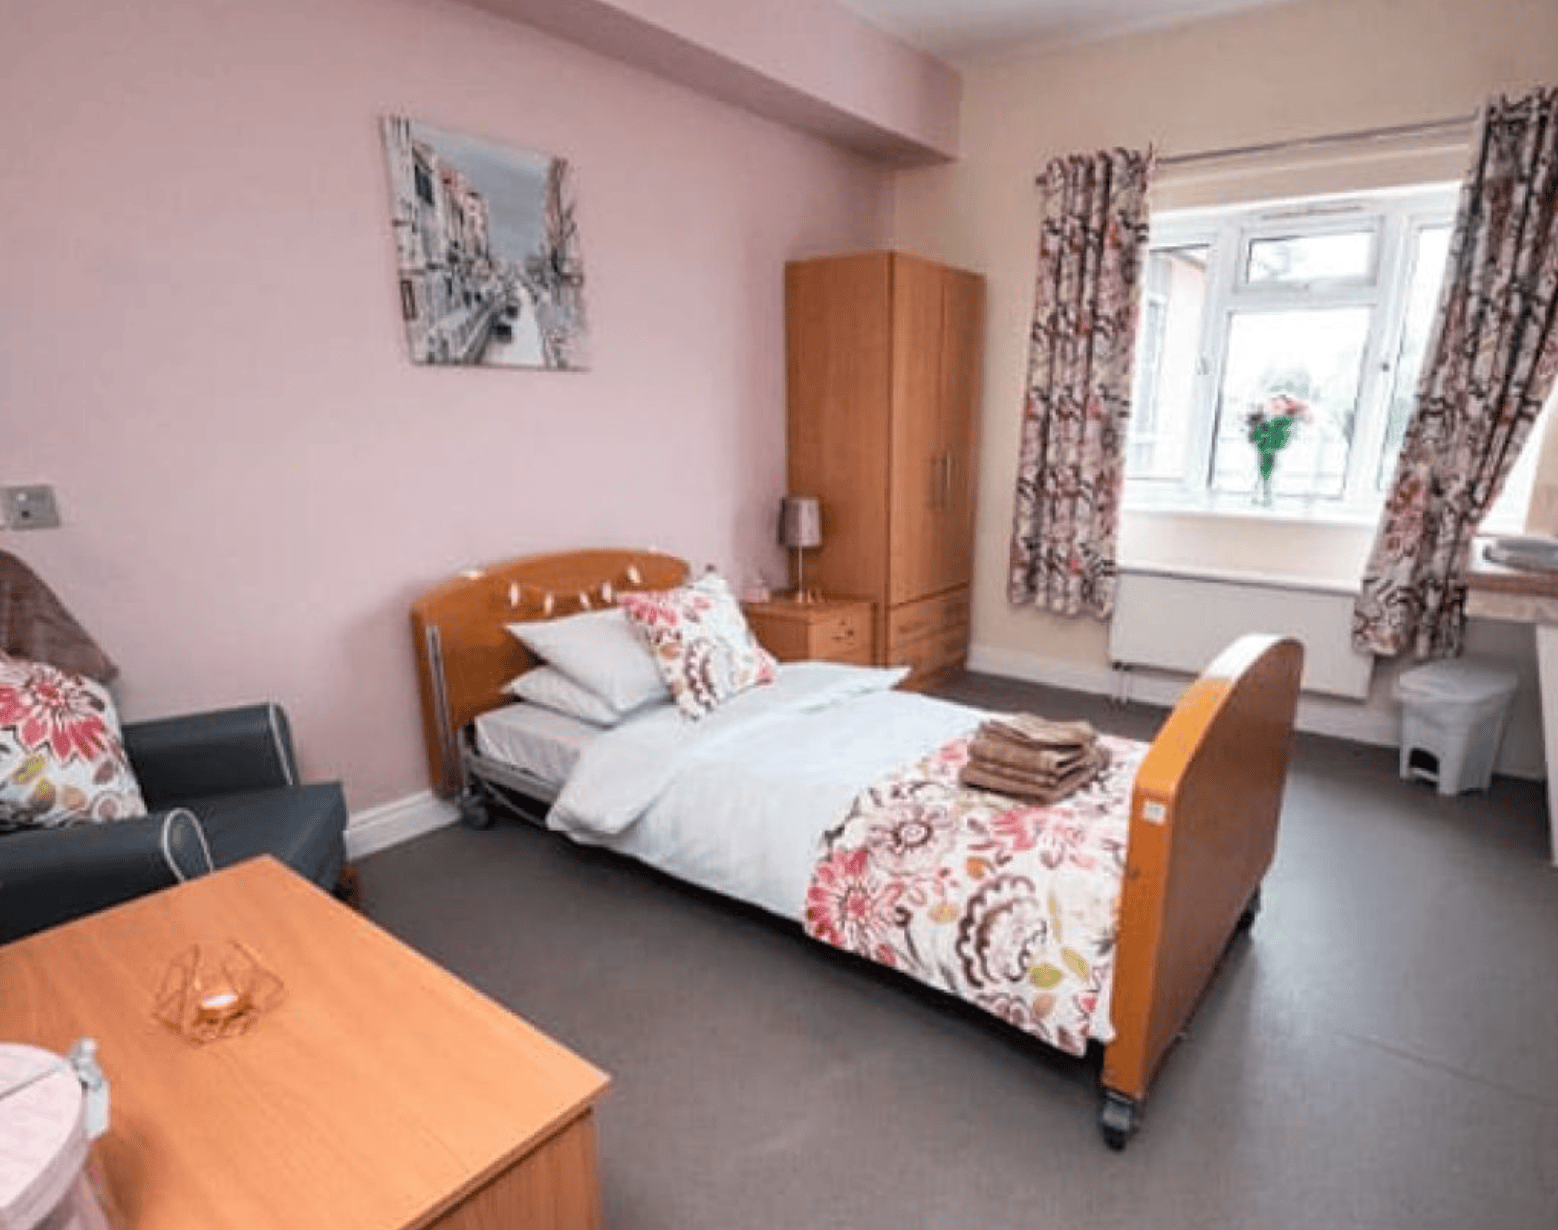 Bedroom at Lowmoor Nursing Home, Kirkby-in-Ashfield, Nottingham